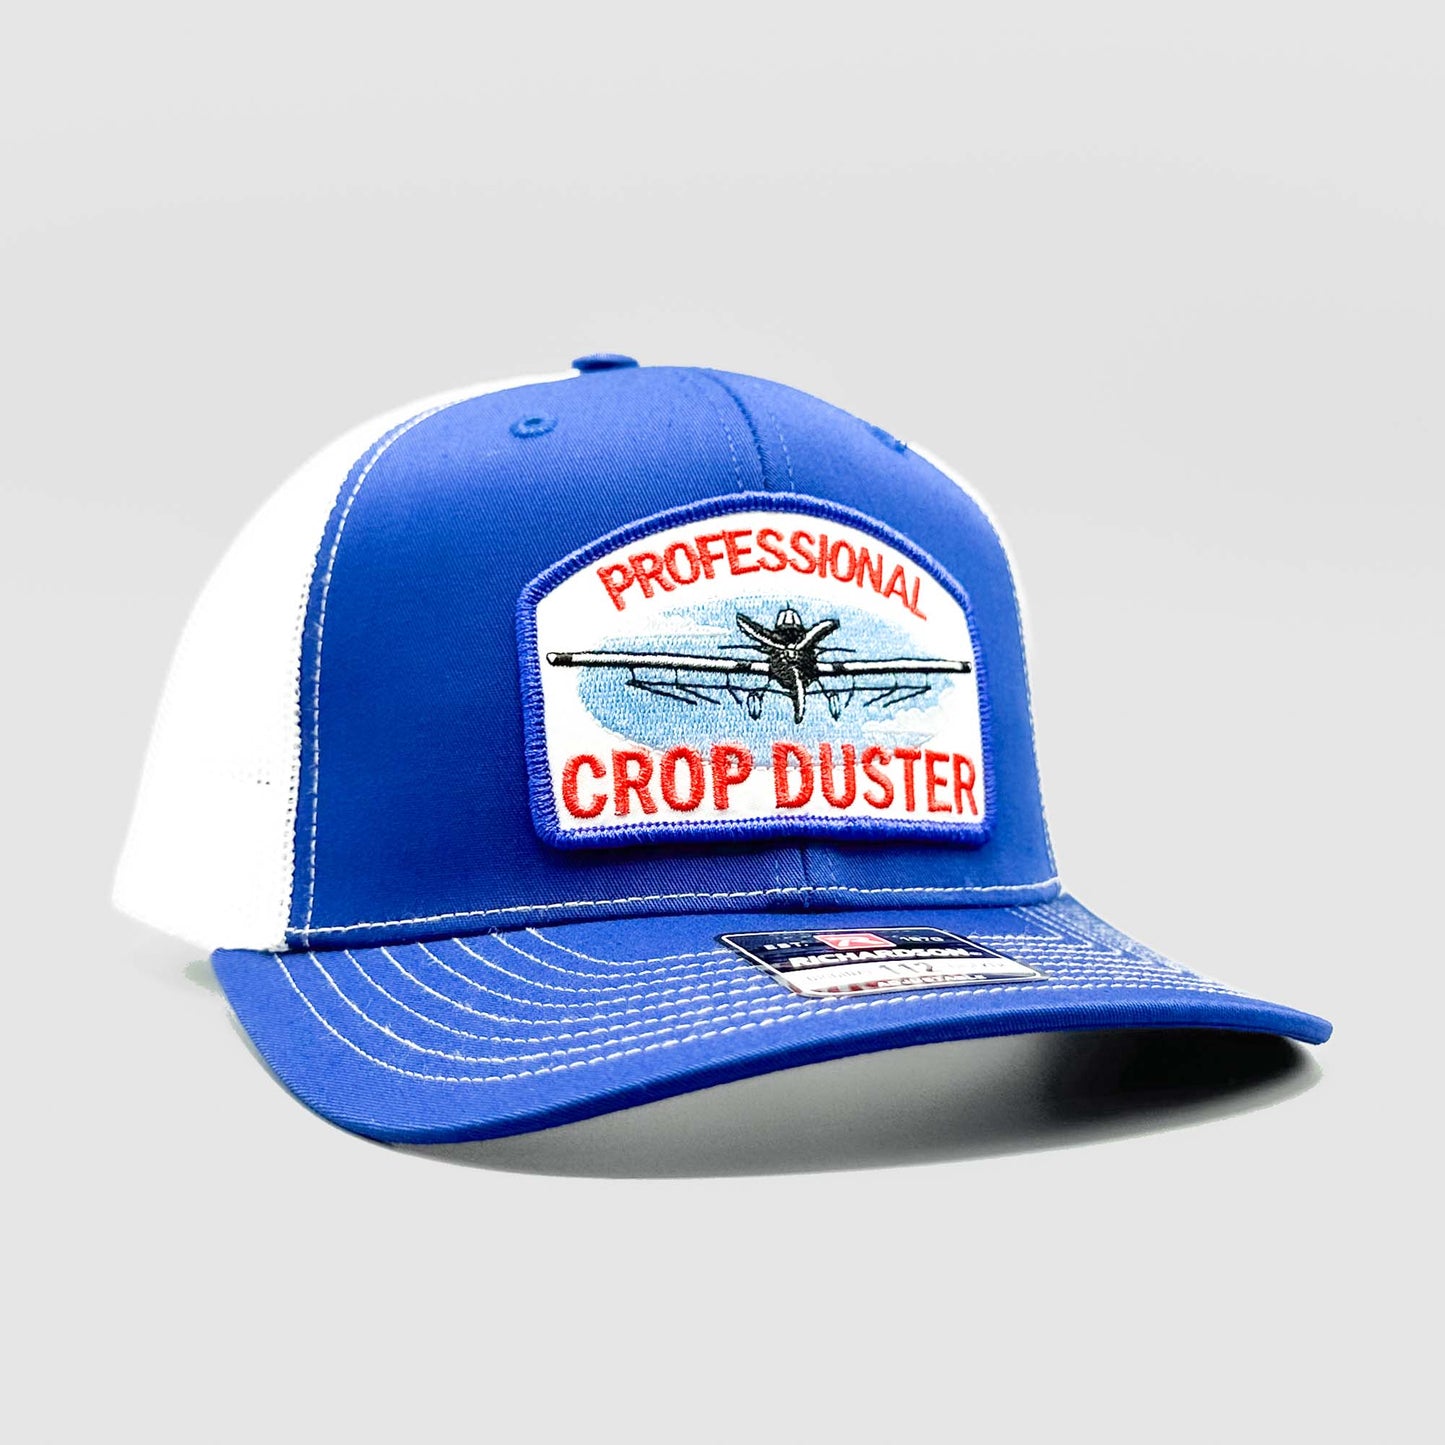 Professional Crop Duster Funny Trucker Hat